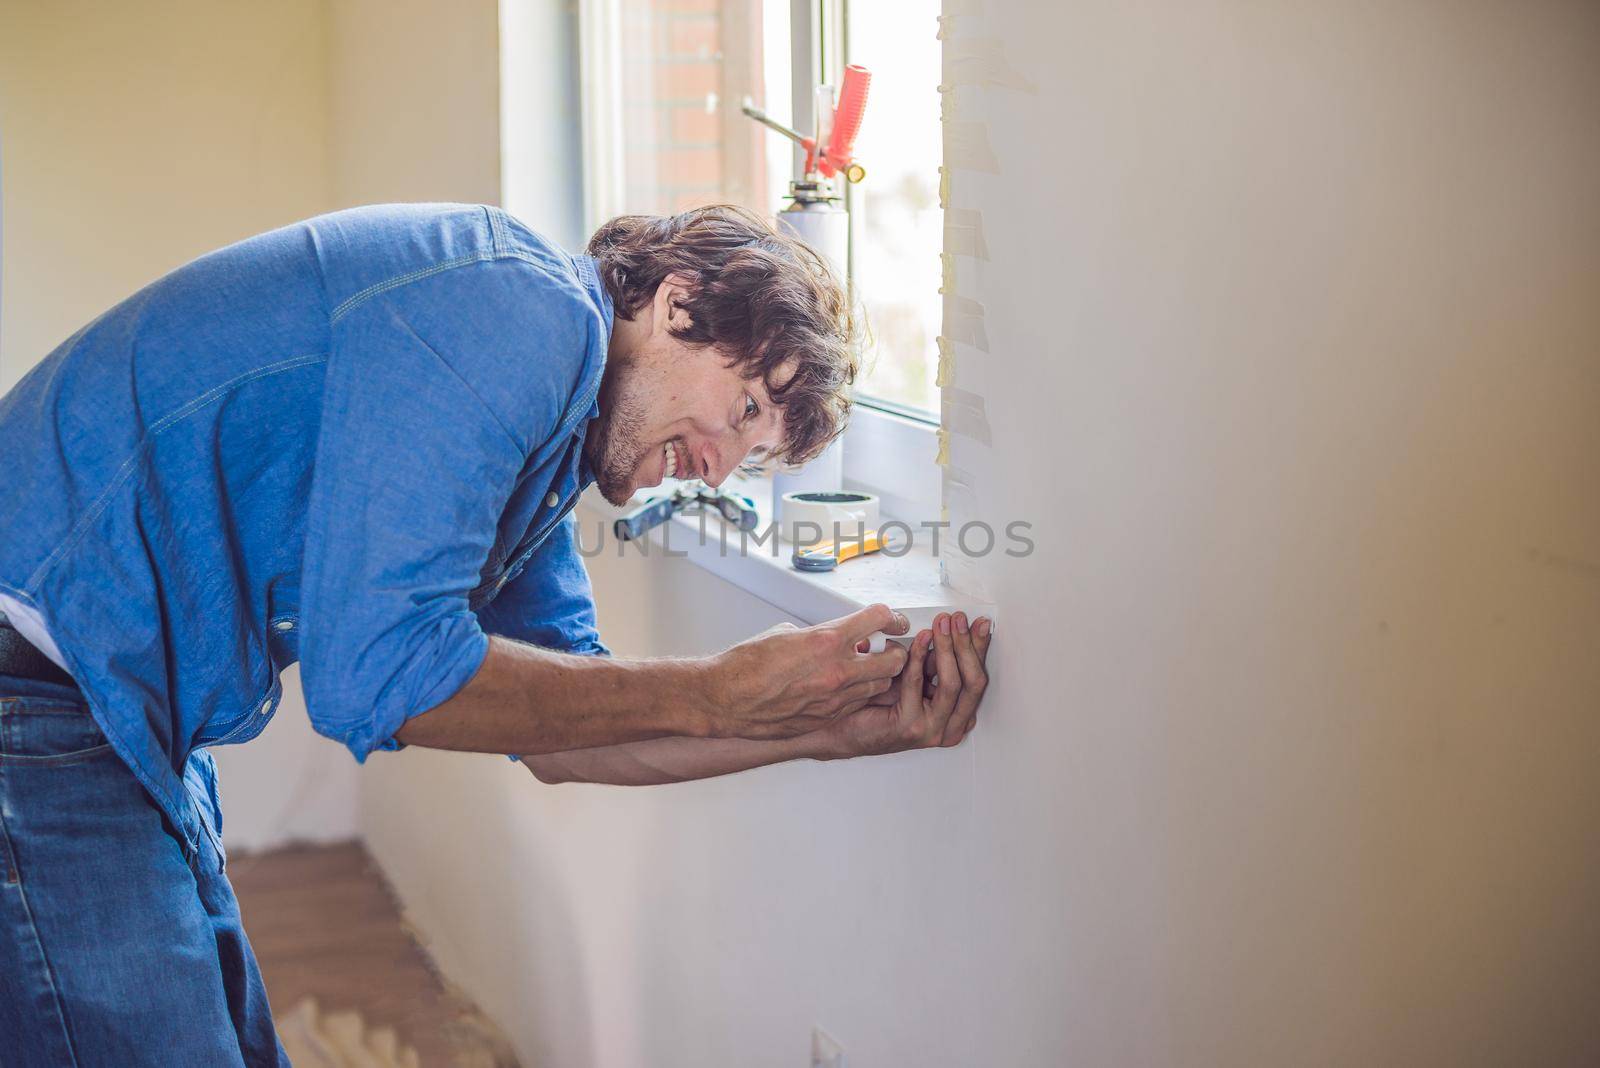 Man in a blue shirt does window installation by galitskaya